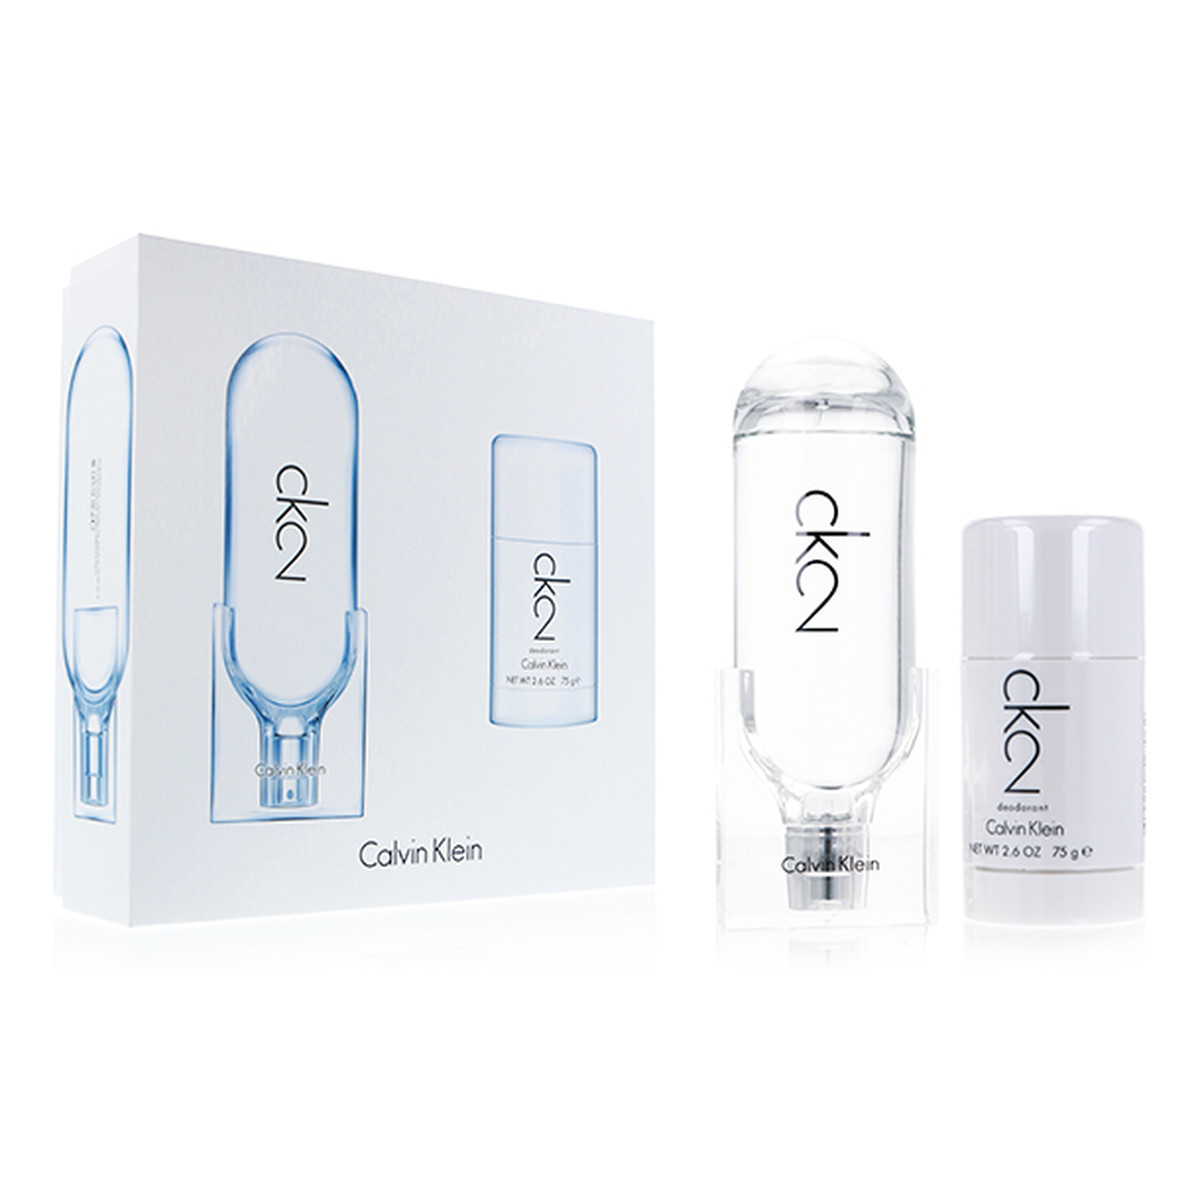 Calvin Klein CK2 Zestaw woda toaletowa spray 100ml + dezodorant sztyft 75ml